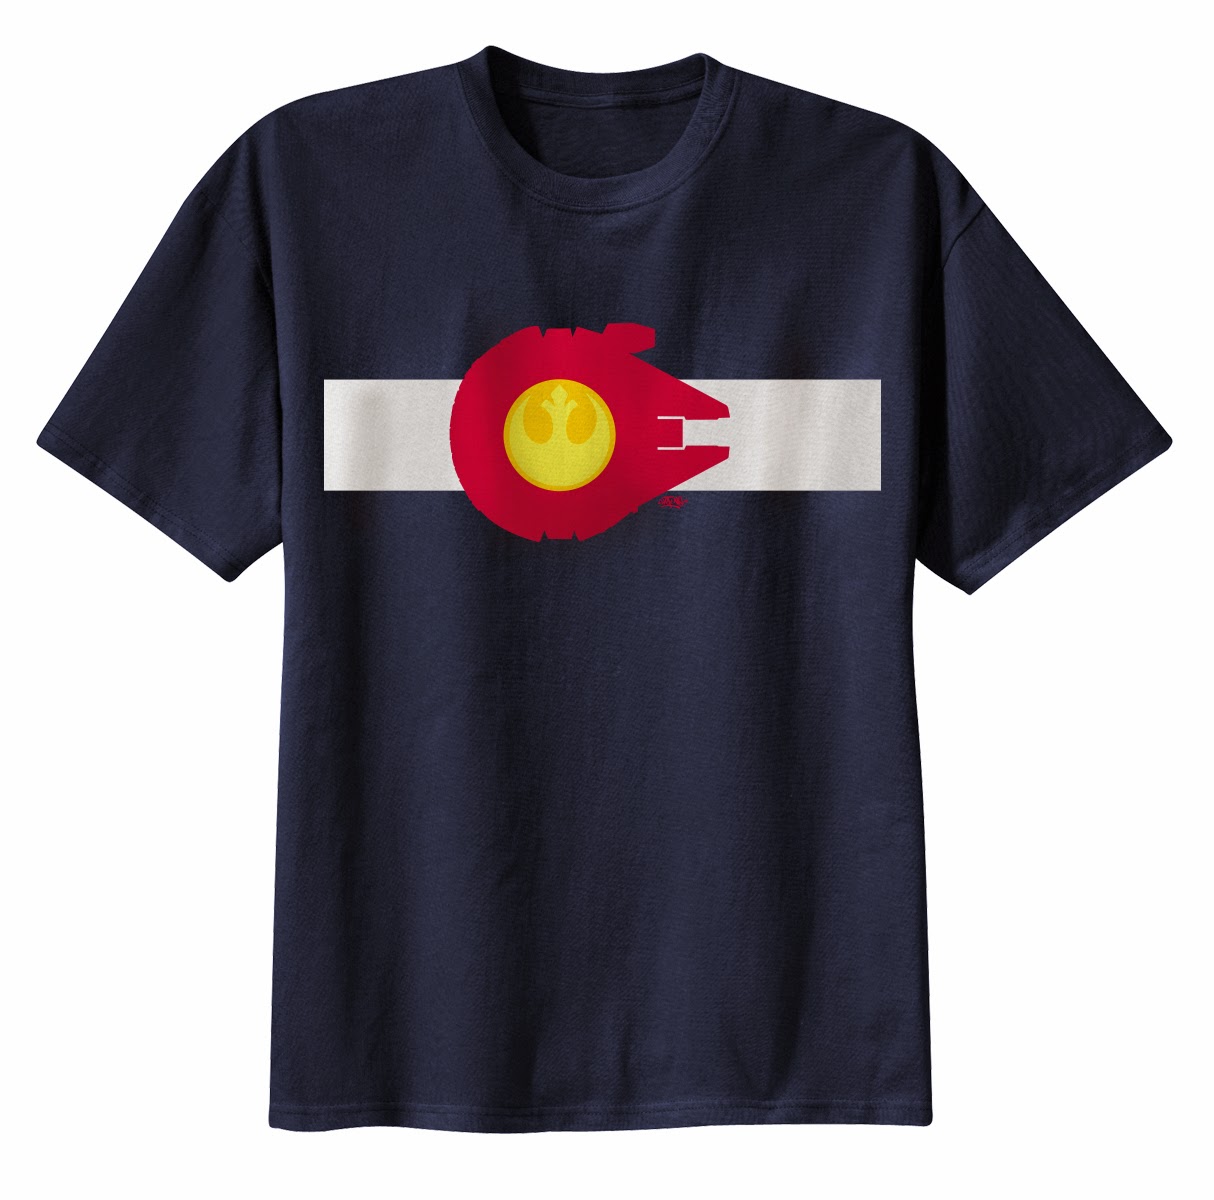 “Rocky Mountain Alliance” Star Wars T-Shirt by Sket One